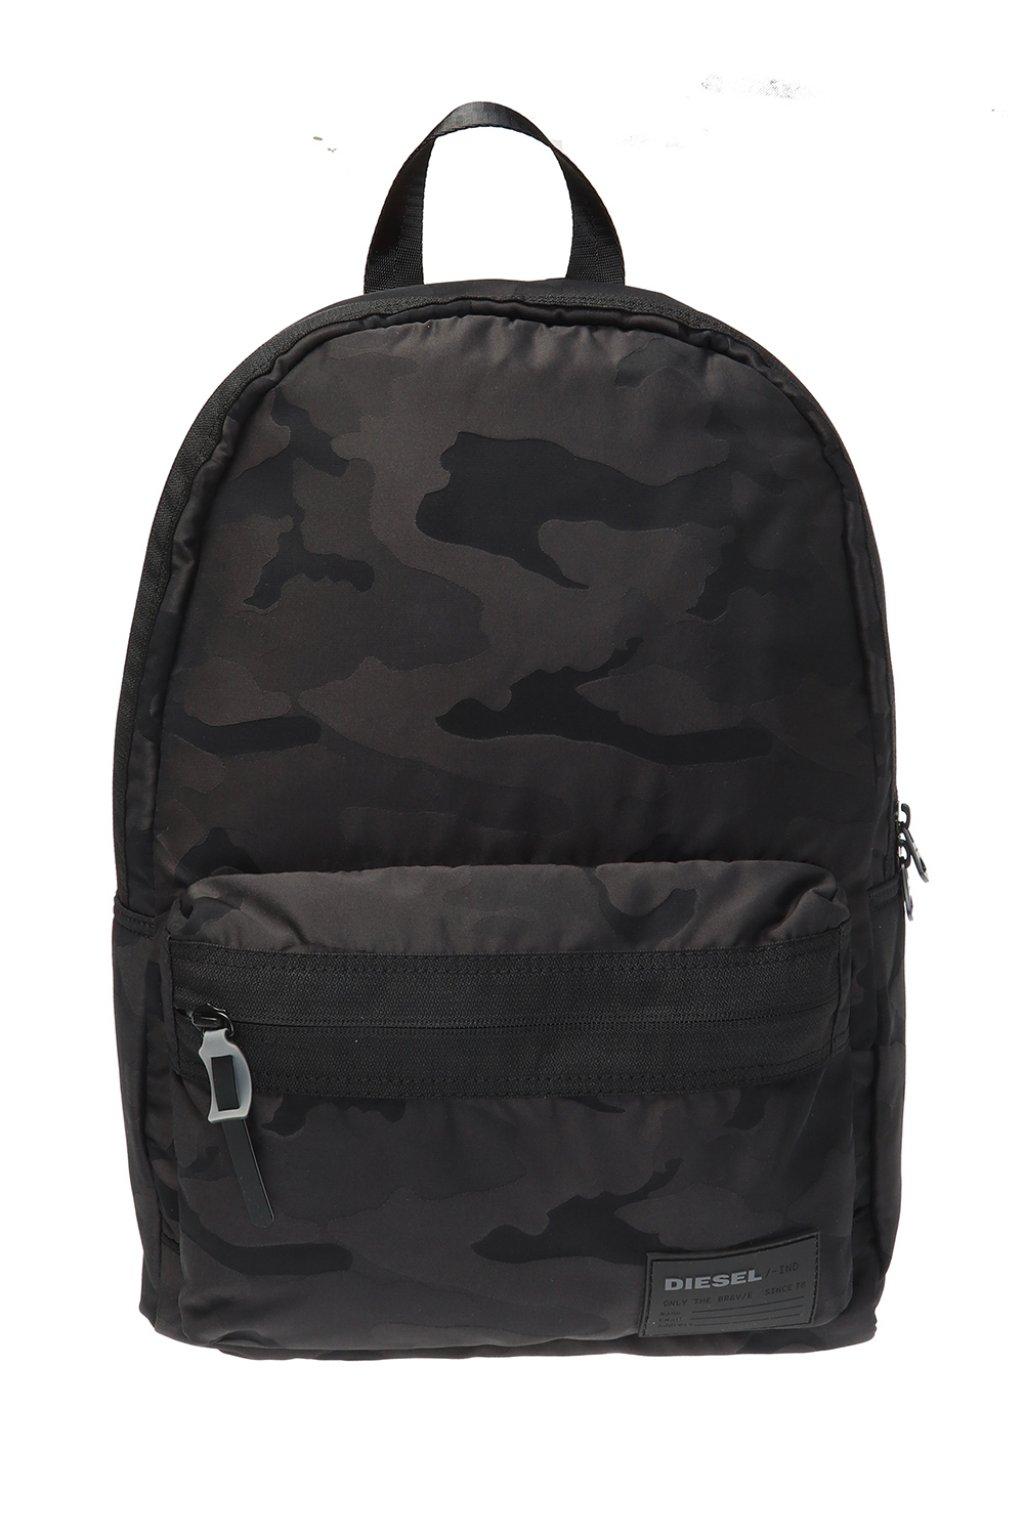 DIESEL Camo Backpack in Black for Men - Lyst